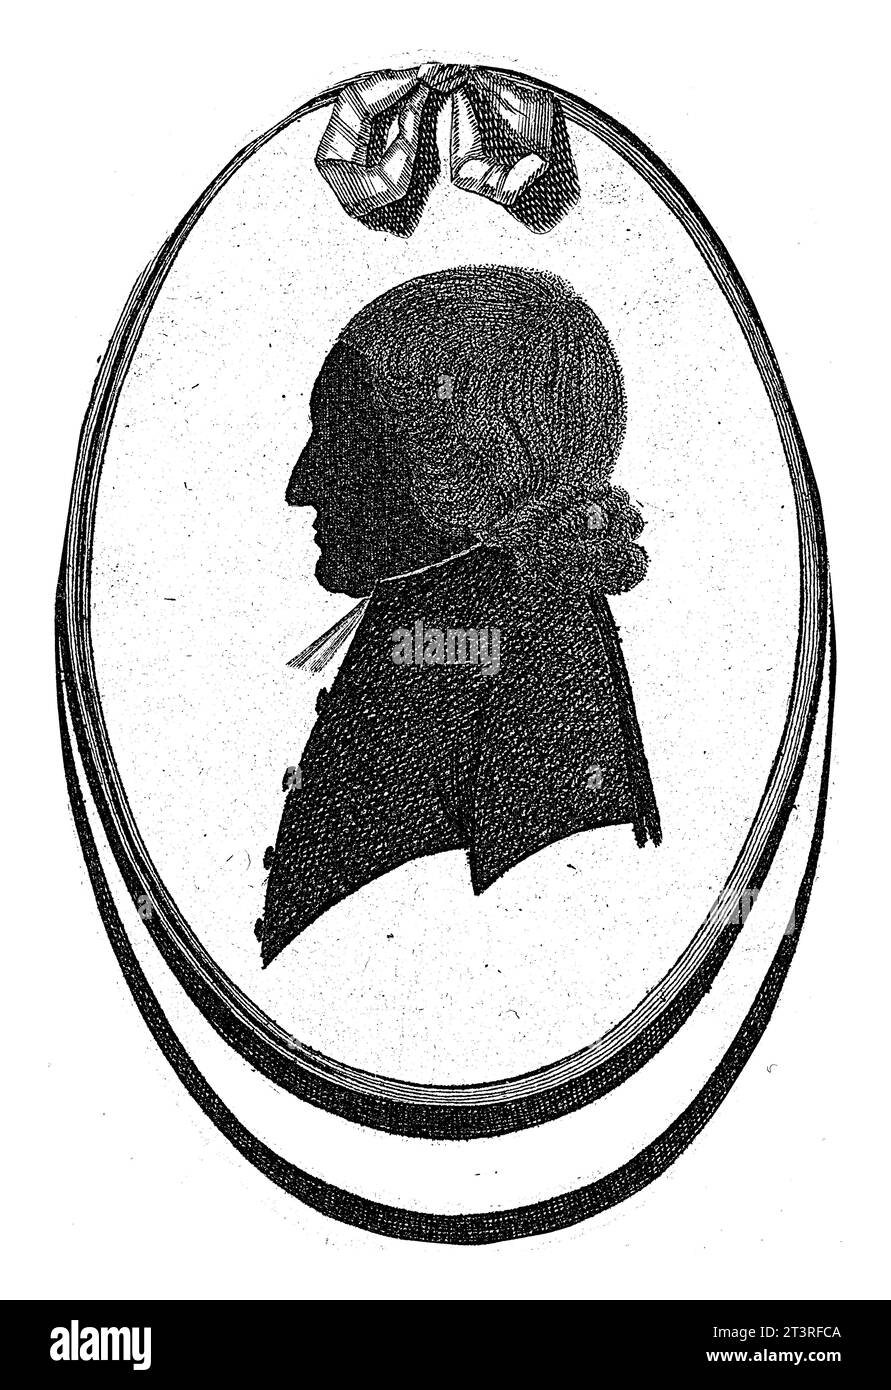 Portrait silhouette de Gijsbert Weijer Jan Bonnet, Govert Kitsen, 1776 - 1810 Portrait buste de profil à gauche de Gijsbert Weijer Jan Bonnet. Banque D'Images